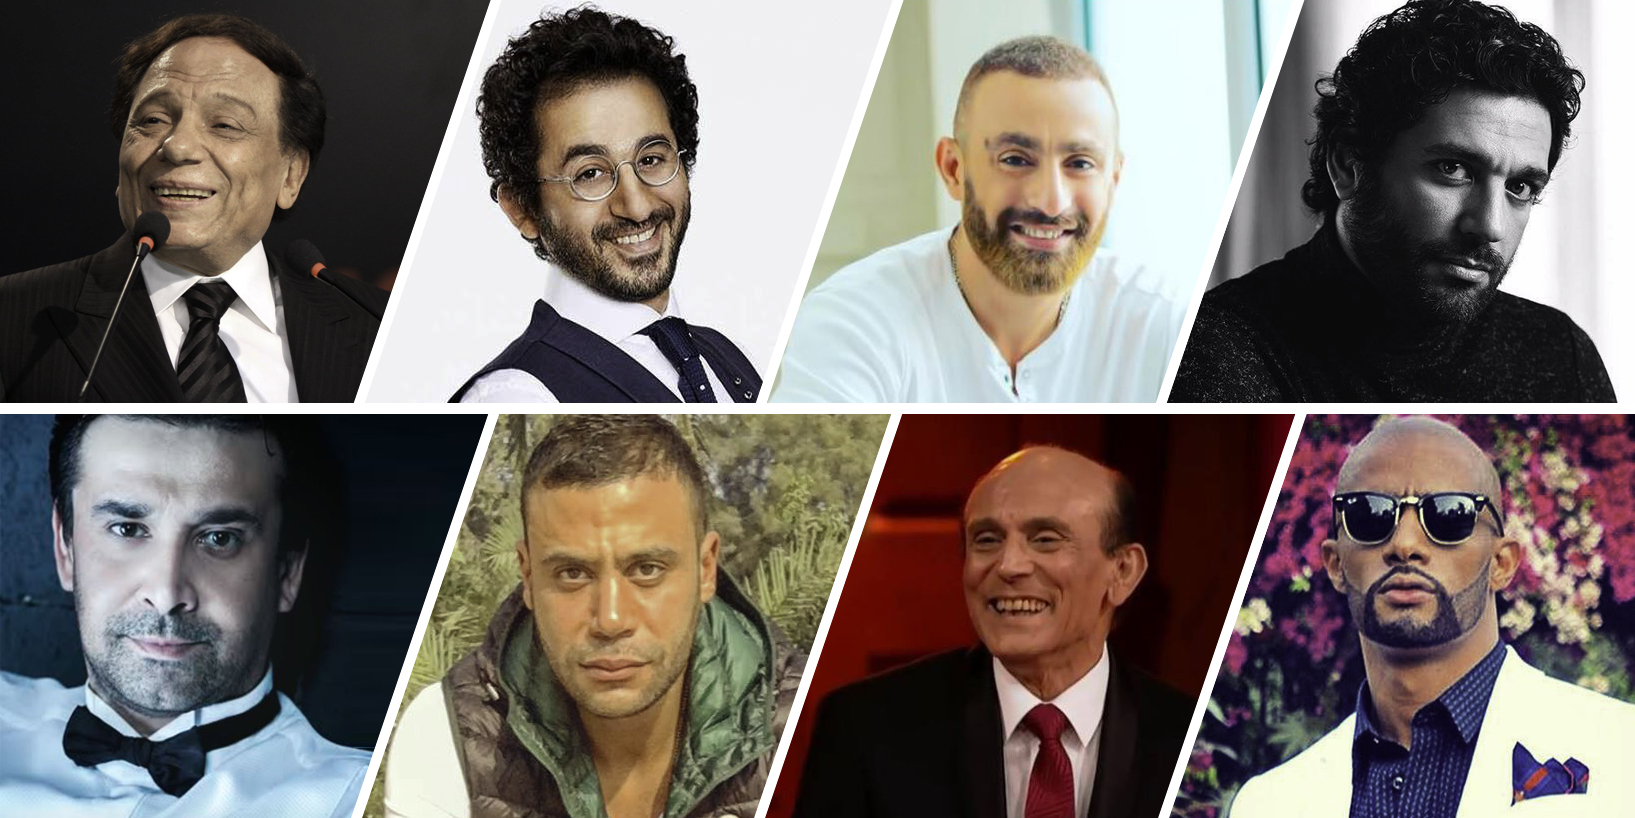 The Top 10 Arab Male Actors